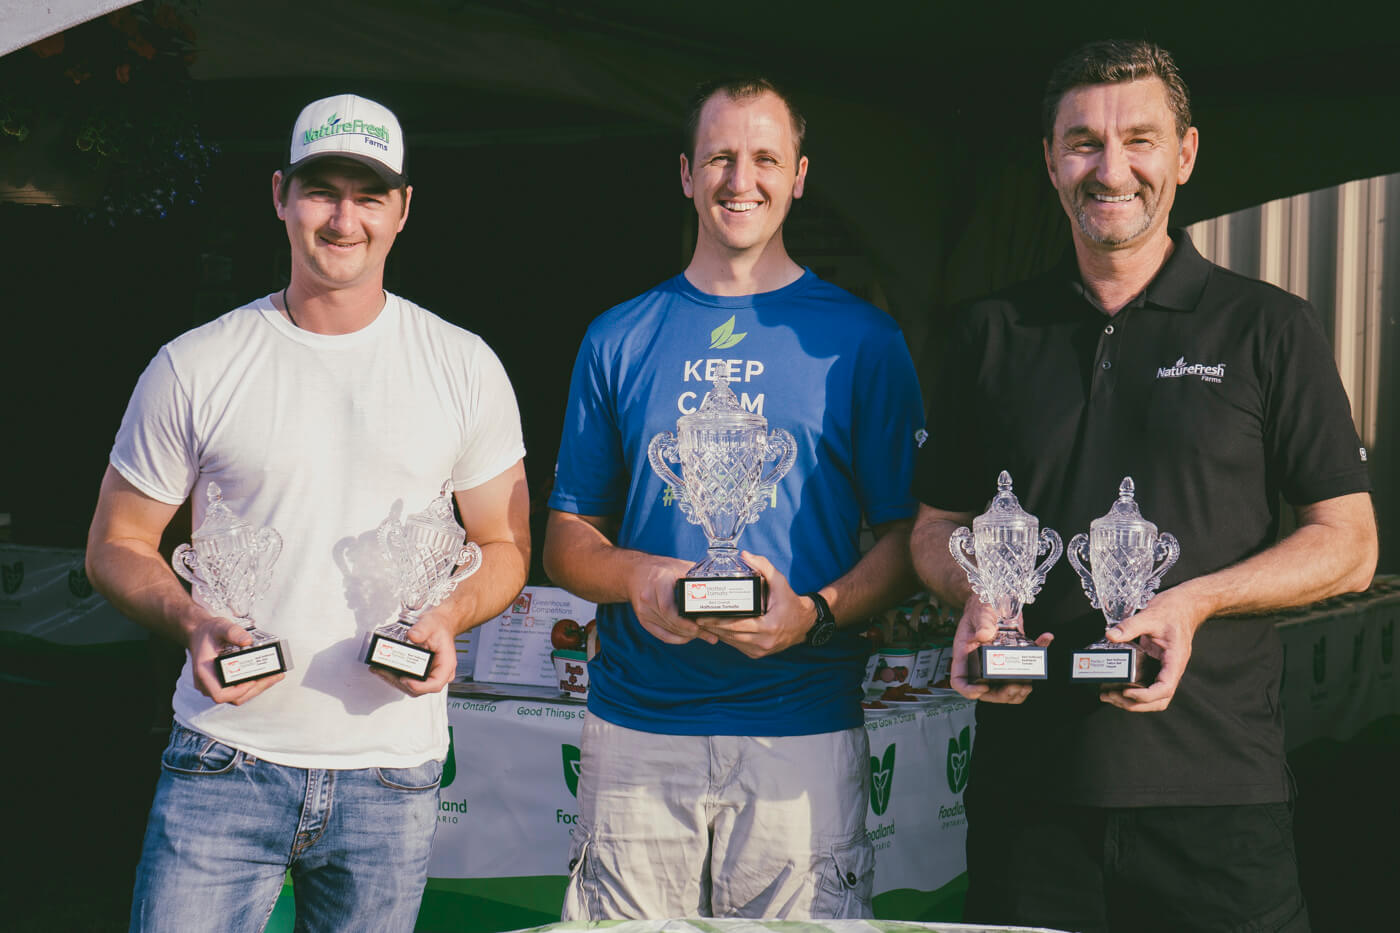 NatureFresh Farms' Matt Quiring, Benny Teichroeb, and Peter Quiring with awards